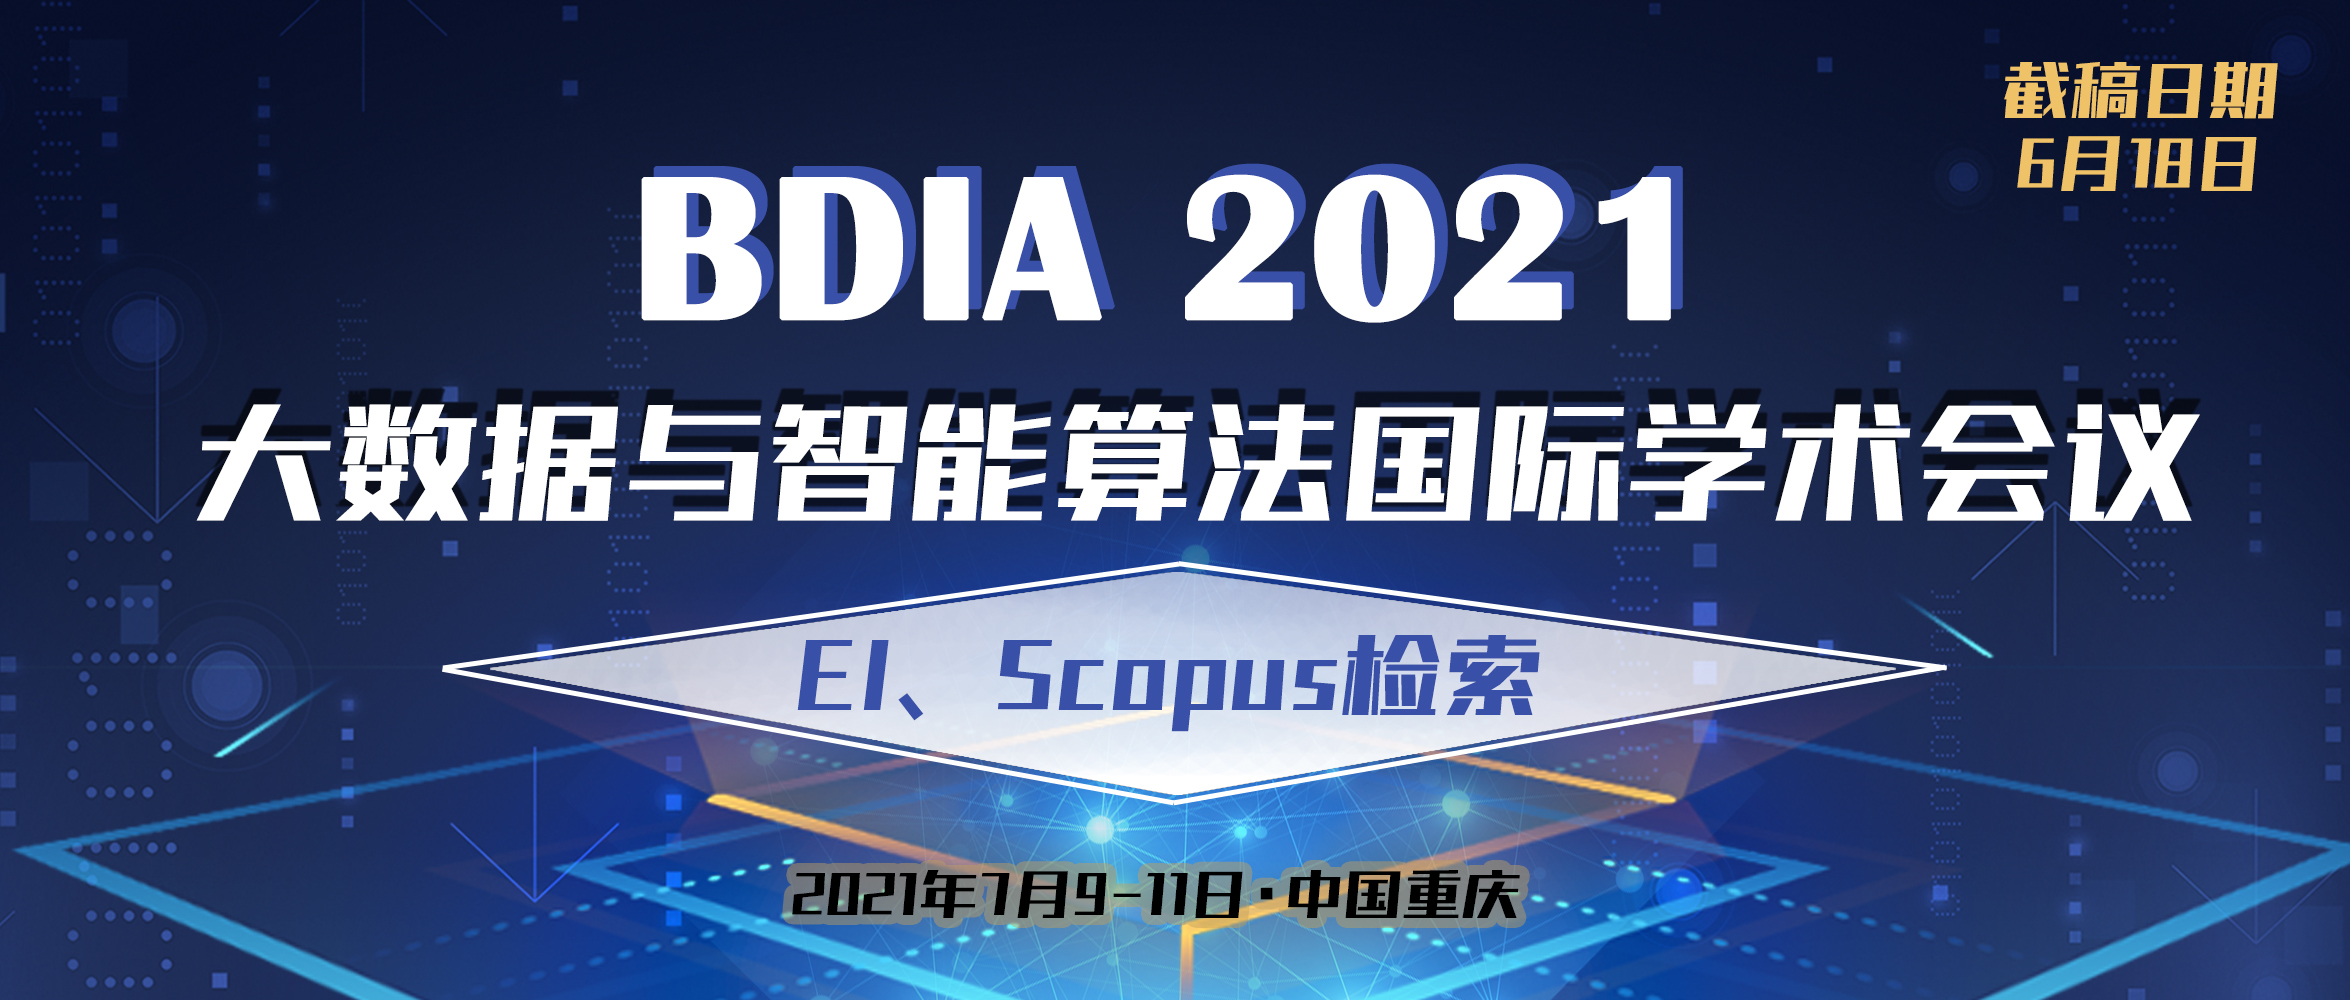 2021 International Conference on Big Data and Intelligent Algorithms (BDIA 2021), Chongqing, China